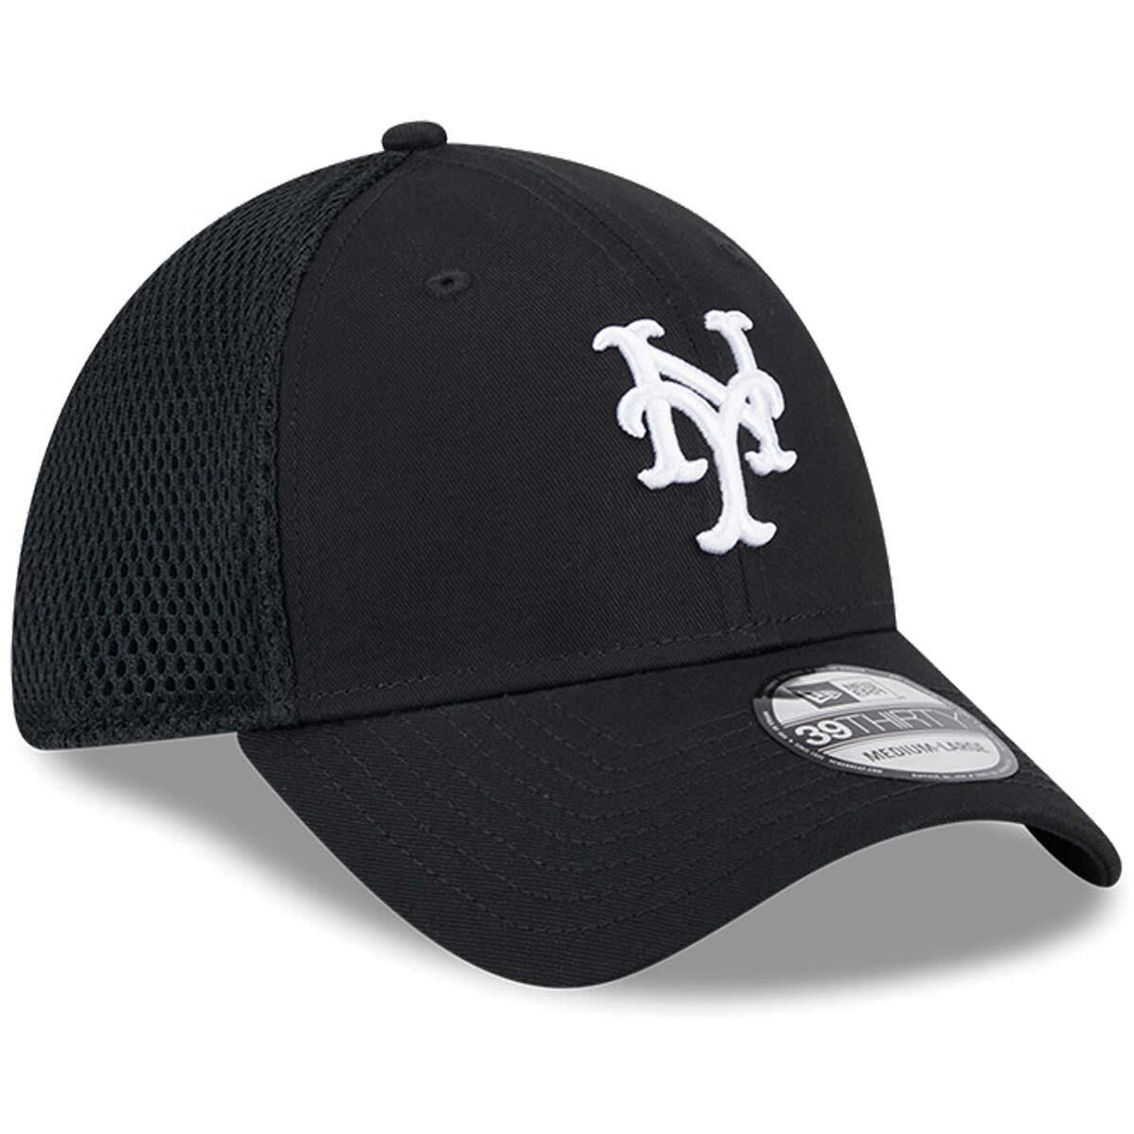 New Era Men's New York Mets Evergreen Black & White Neo 39THIRTY Flex Hat - Image 4 of 4